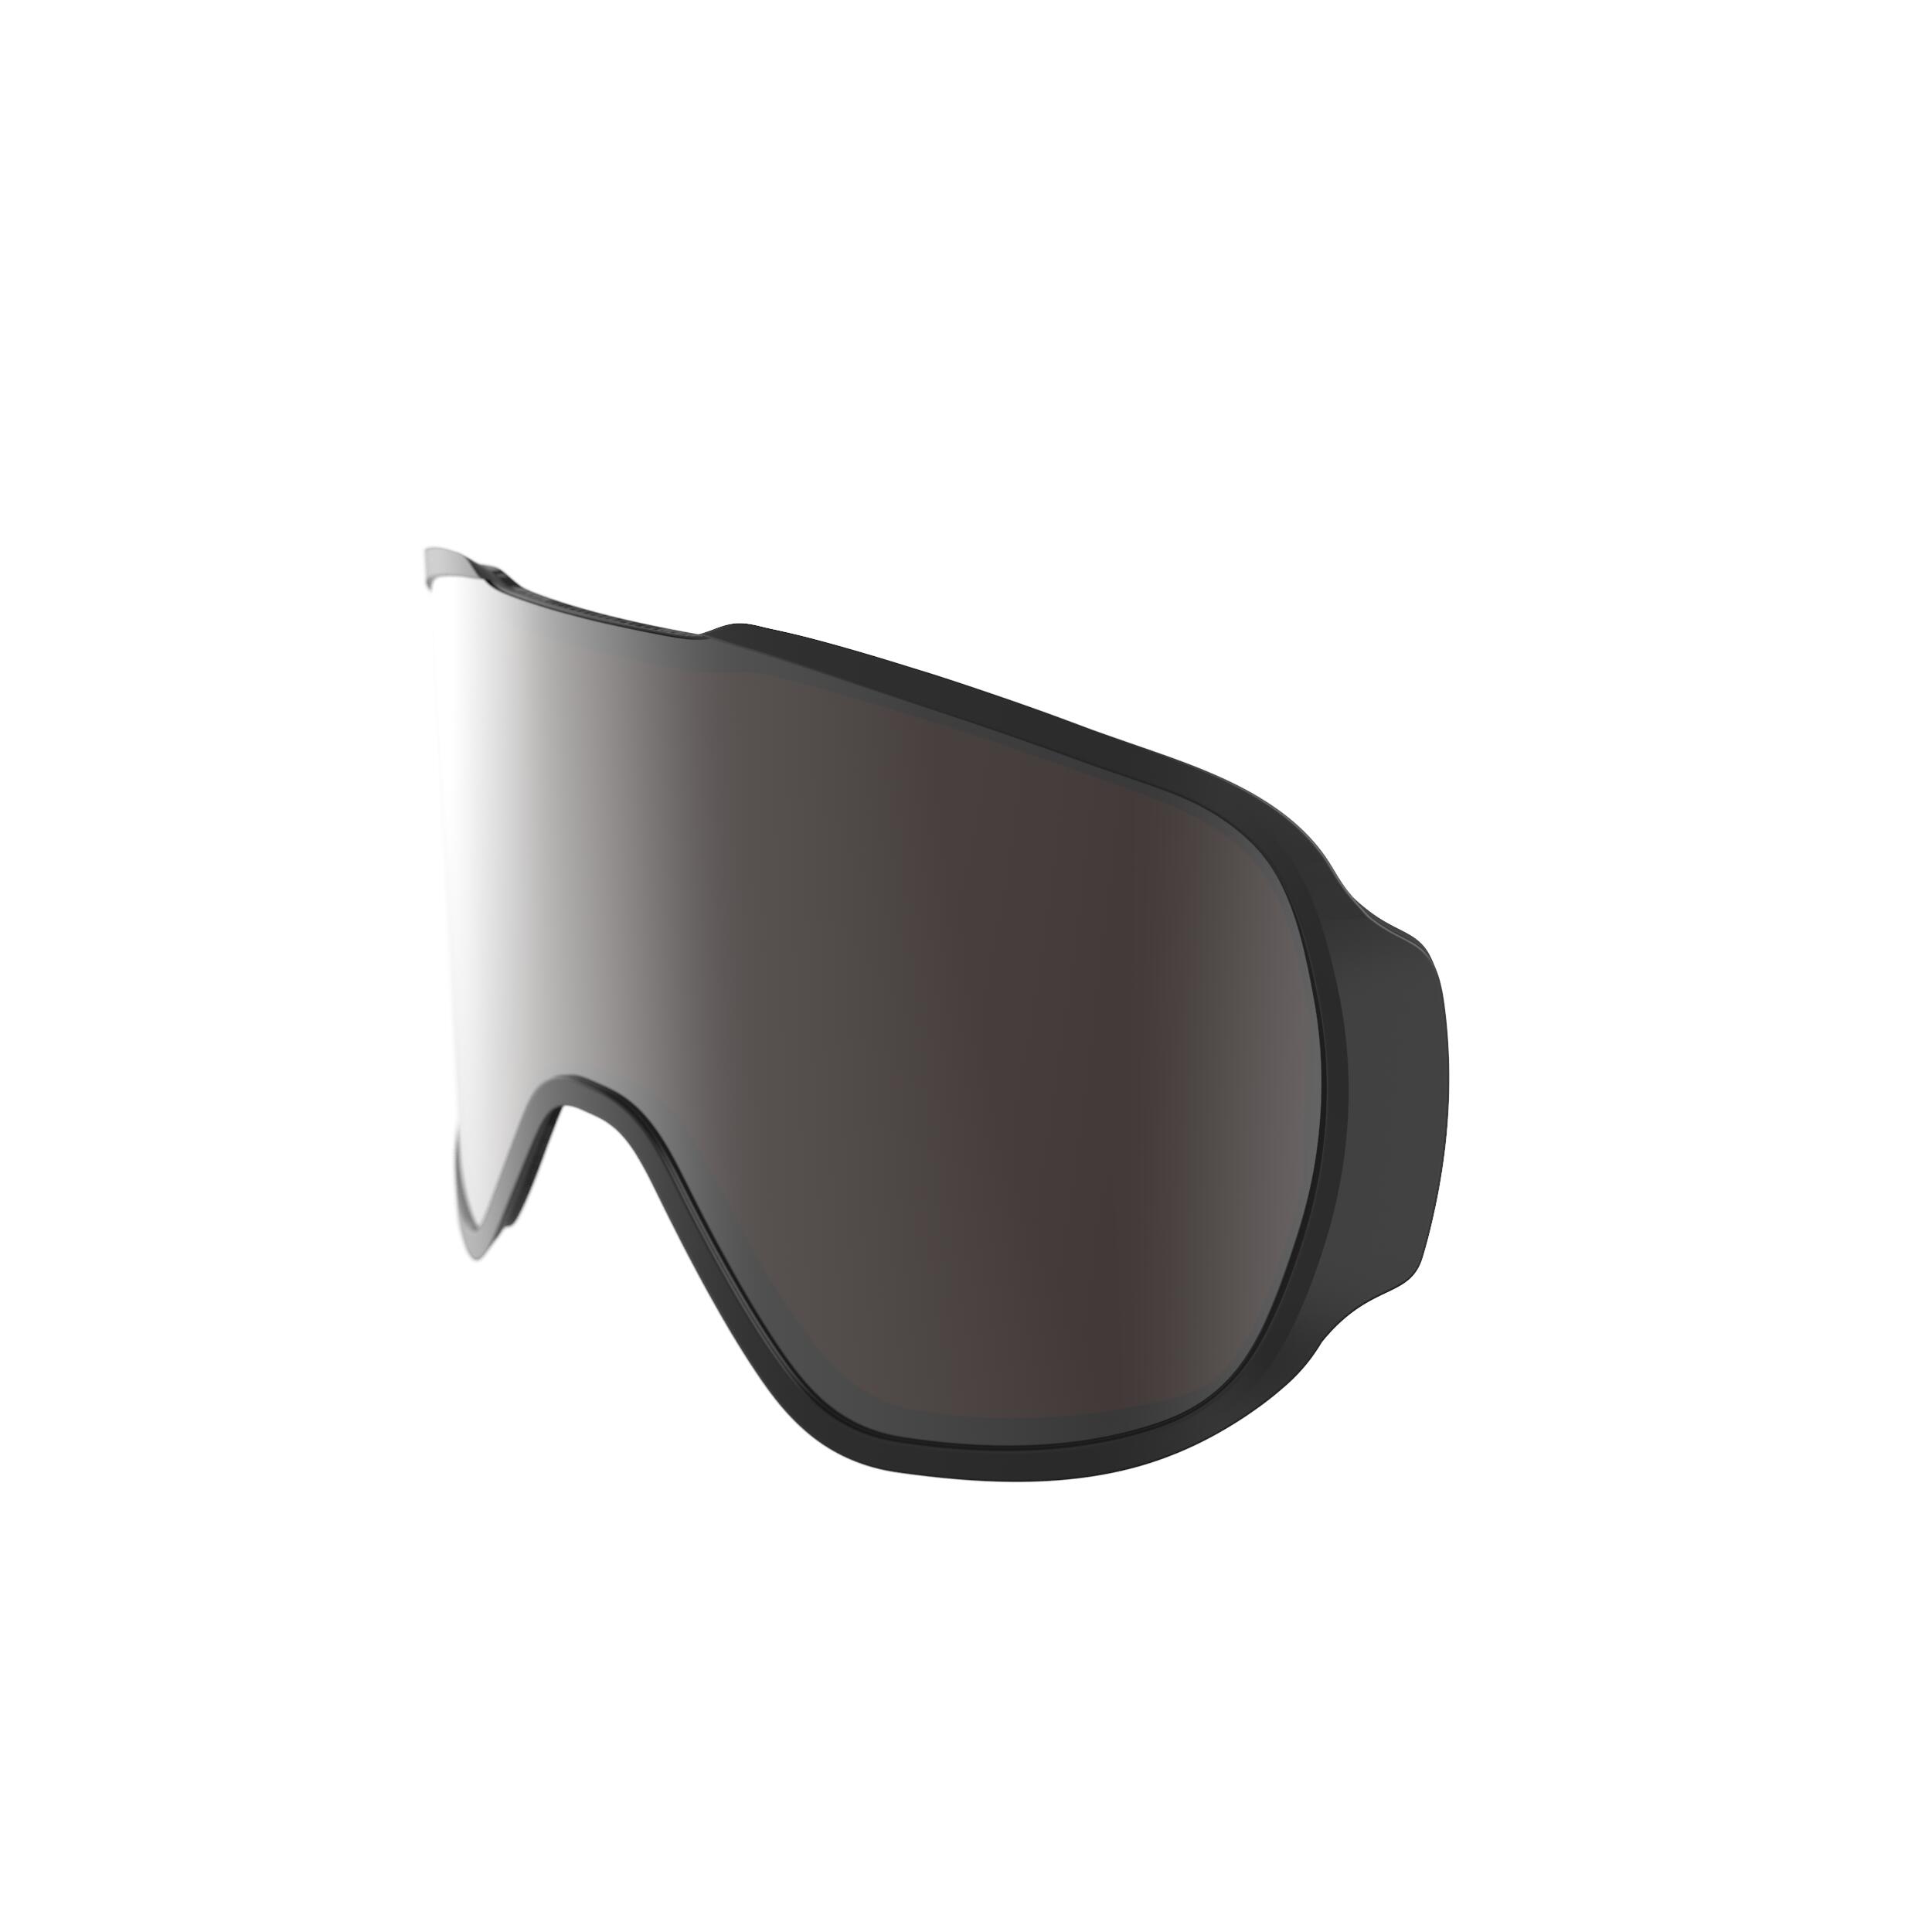 Lentilă ochelari schi S 500 I Copii/Adulți La Oferta Online decathlon imagine La Oferta Online